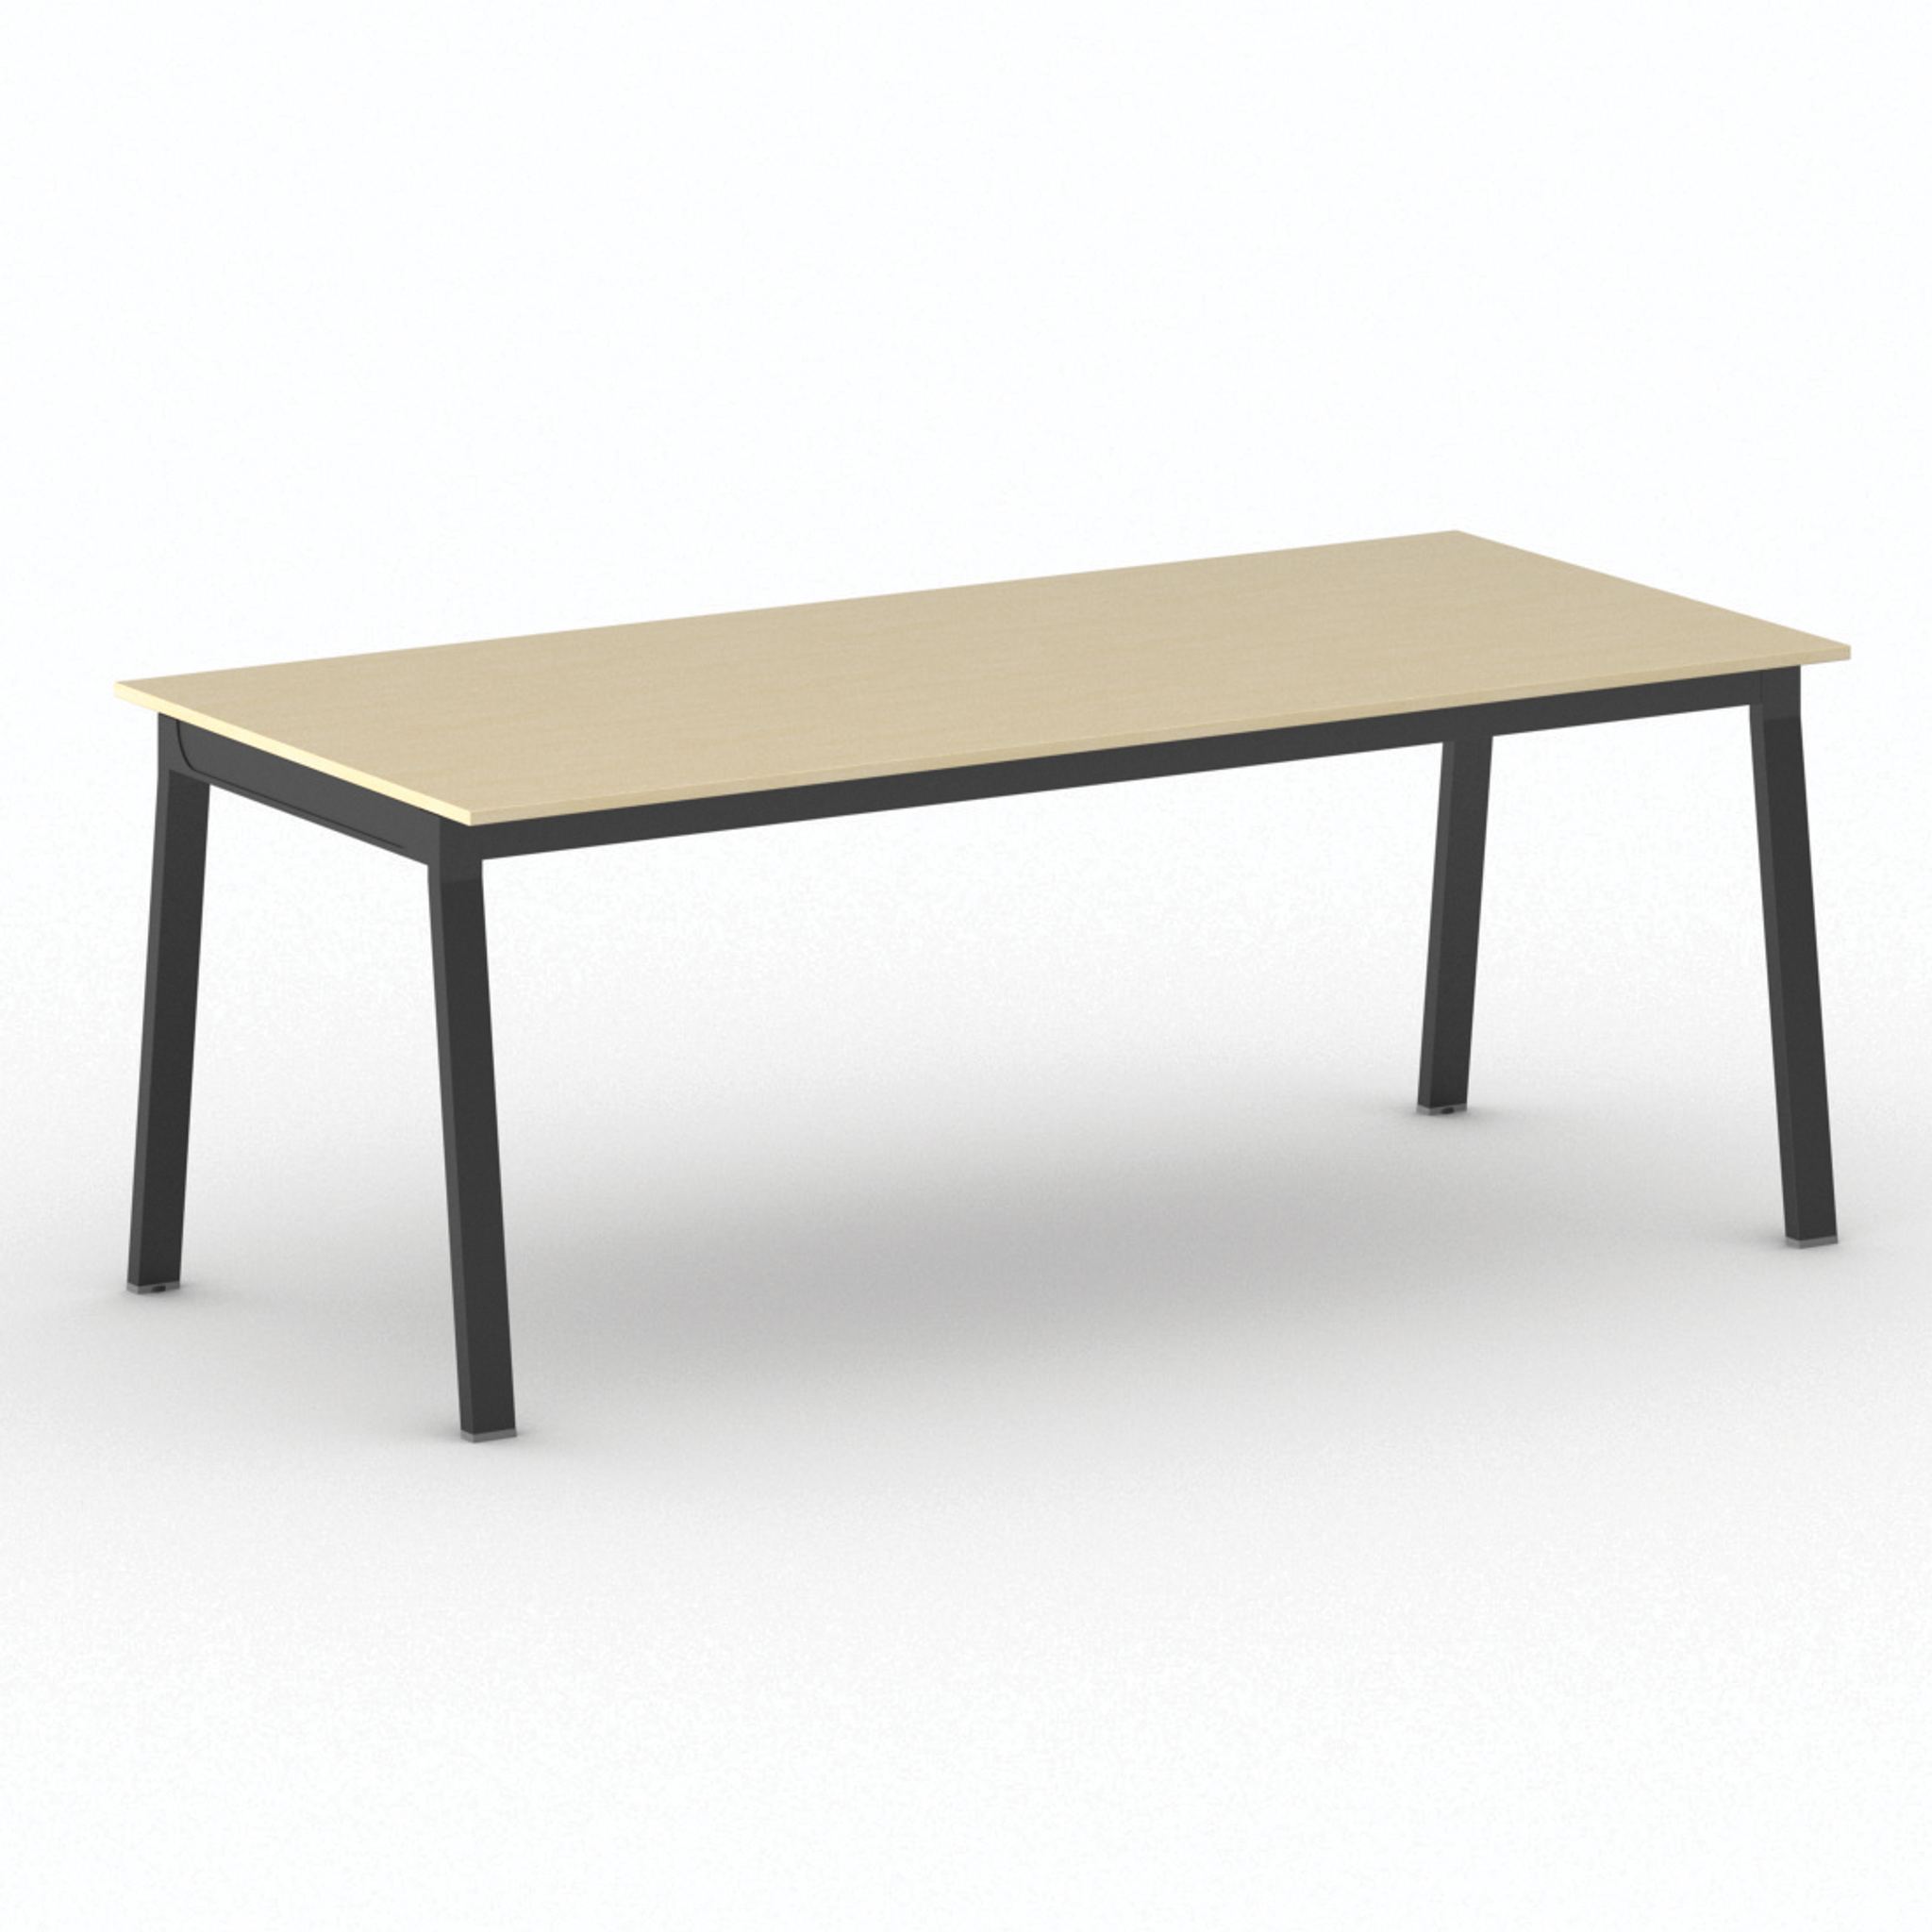 Stół PRIMO BASIC 2000 x 900 x 750 mm